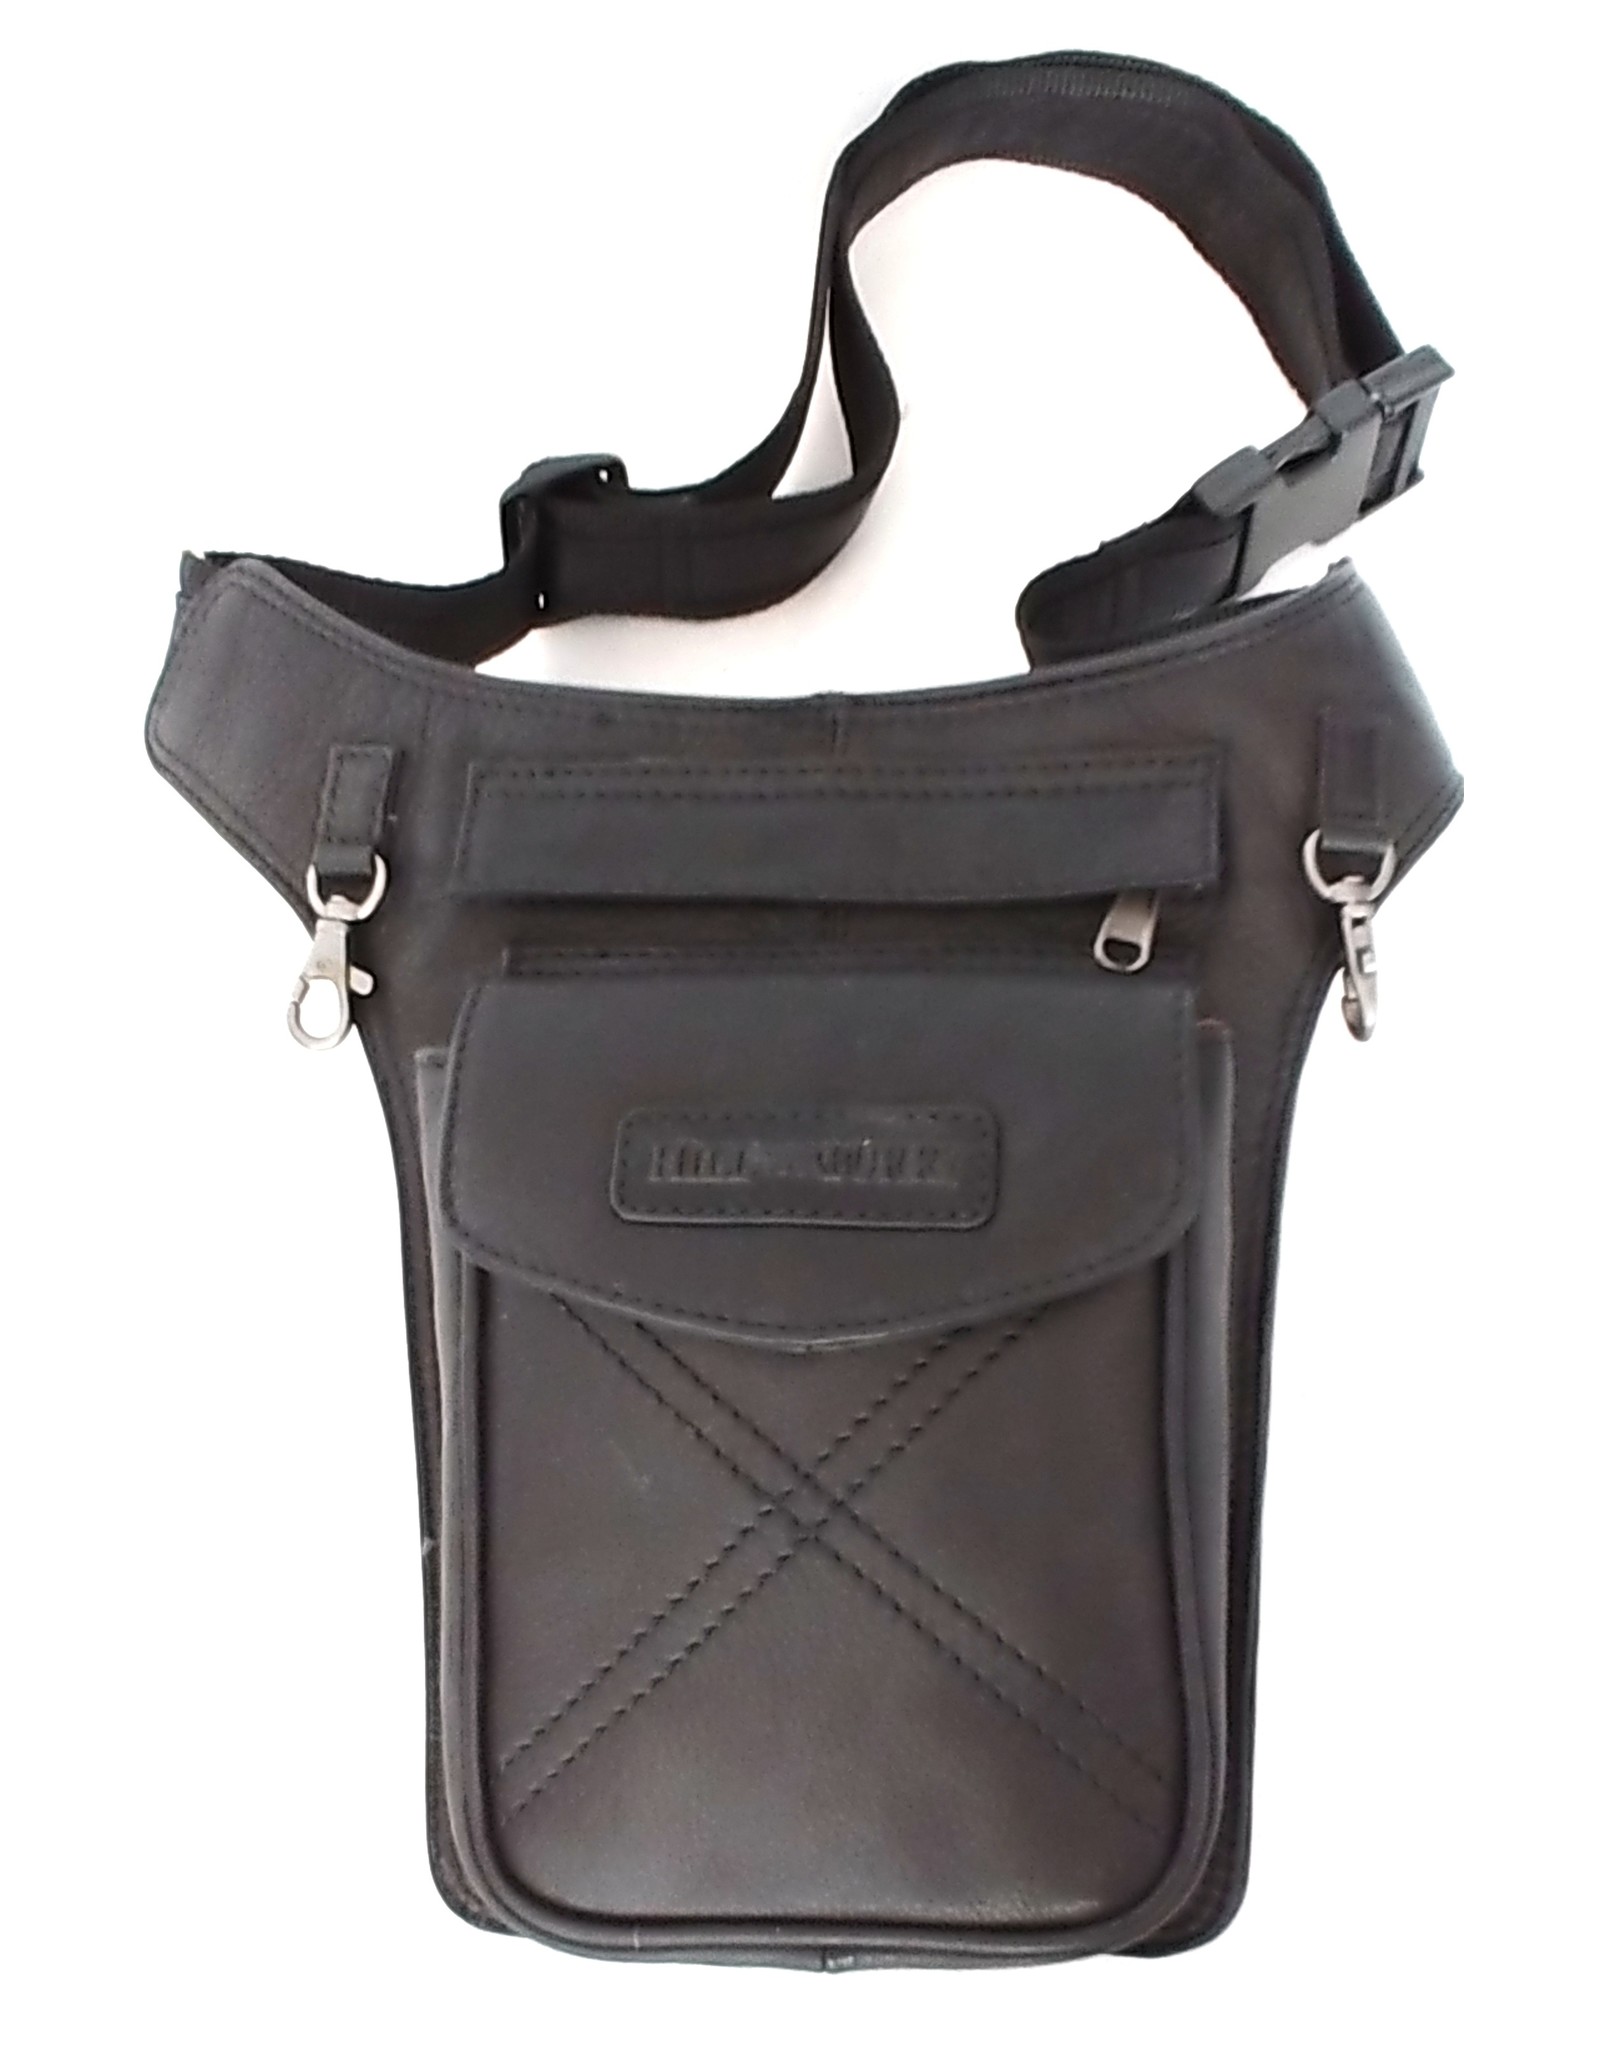 HillBurry Leather bags - HillBurry Leather Waist bag black